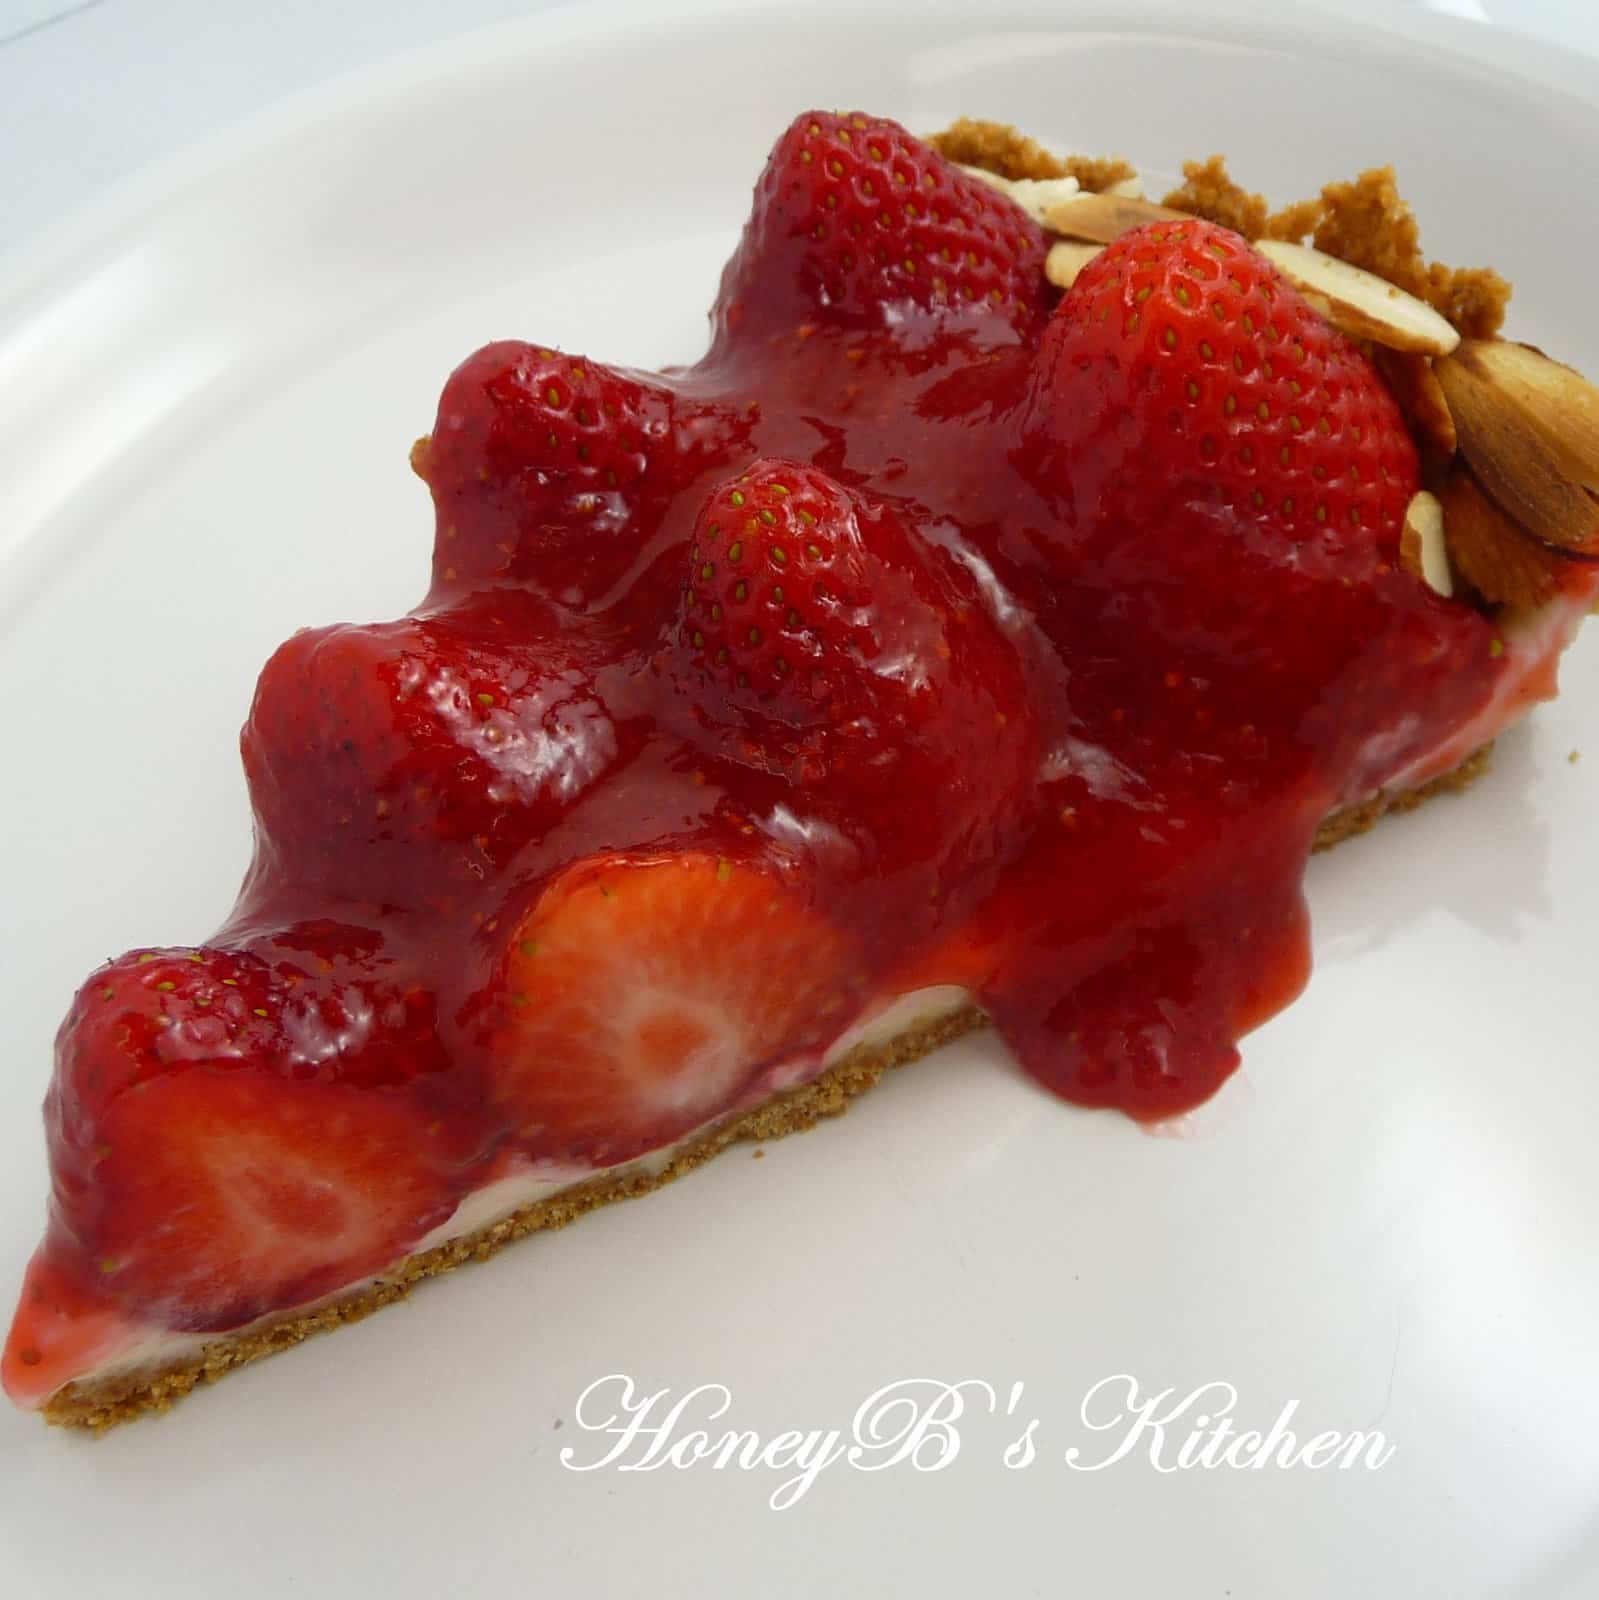 A slice of strawberry cream pie on a white plate.